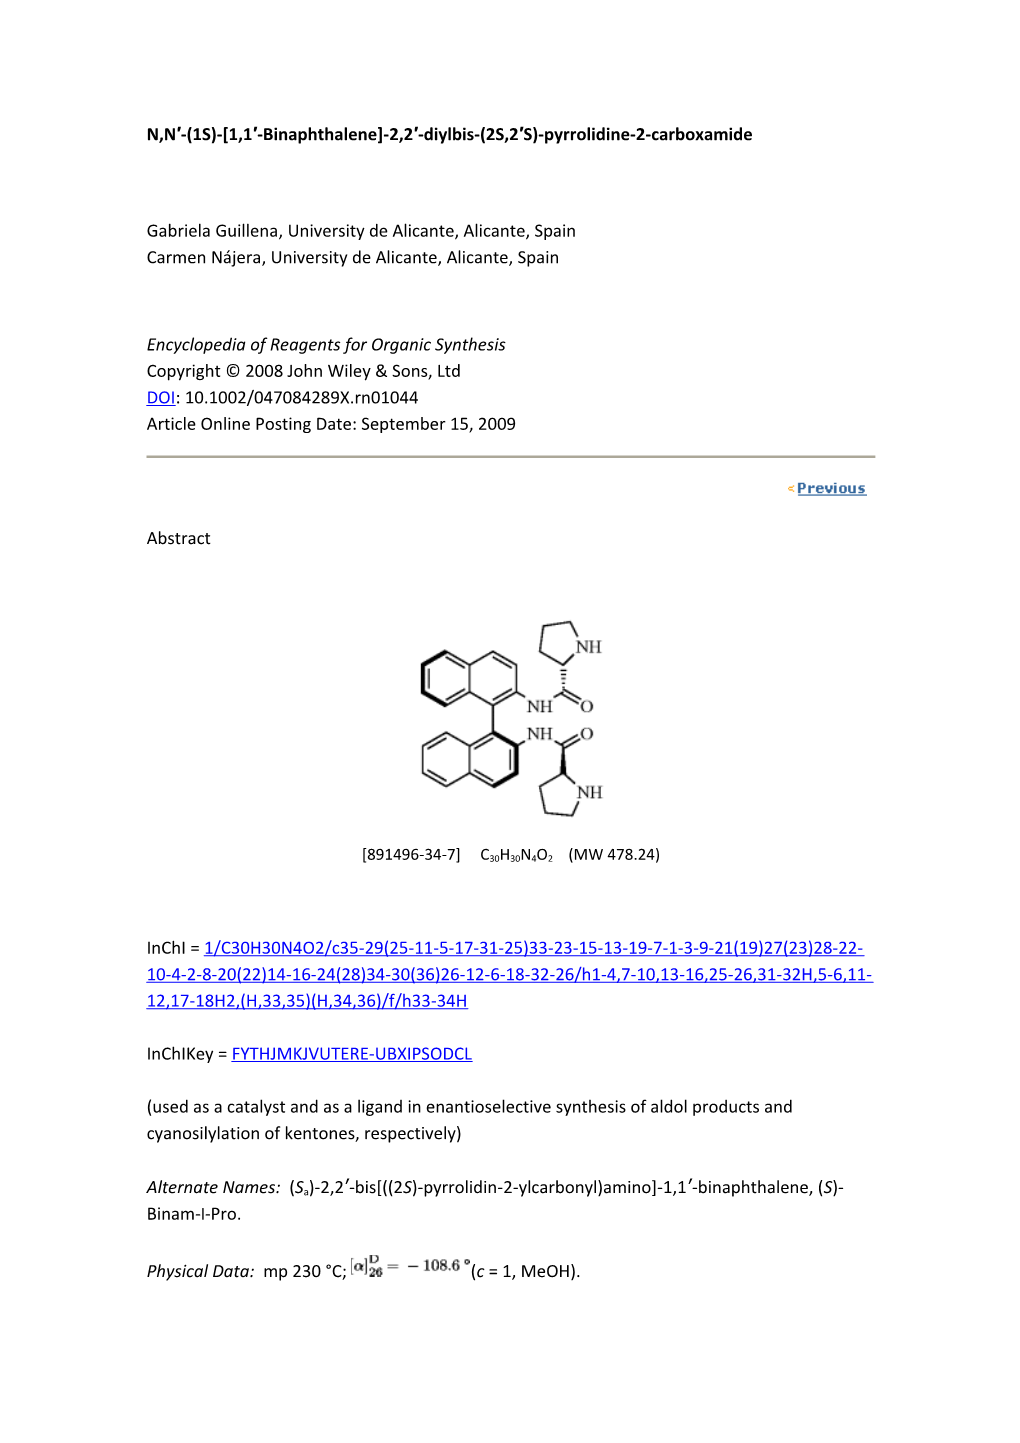 N,N -(1S)- 1,1 -Binaphthalene -2,2 -Diylbis-(2S,2 S)-Pyrrolidine-2-Carboxamide